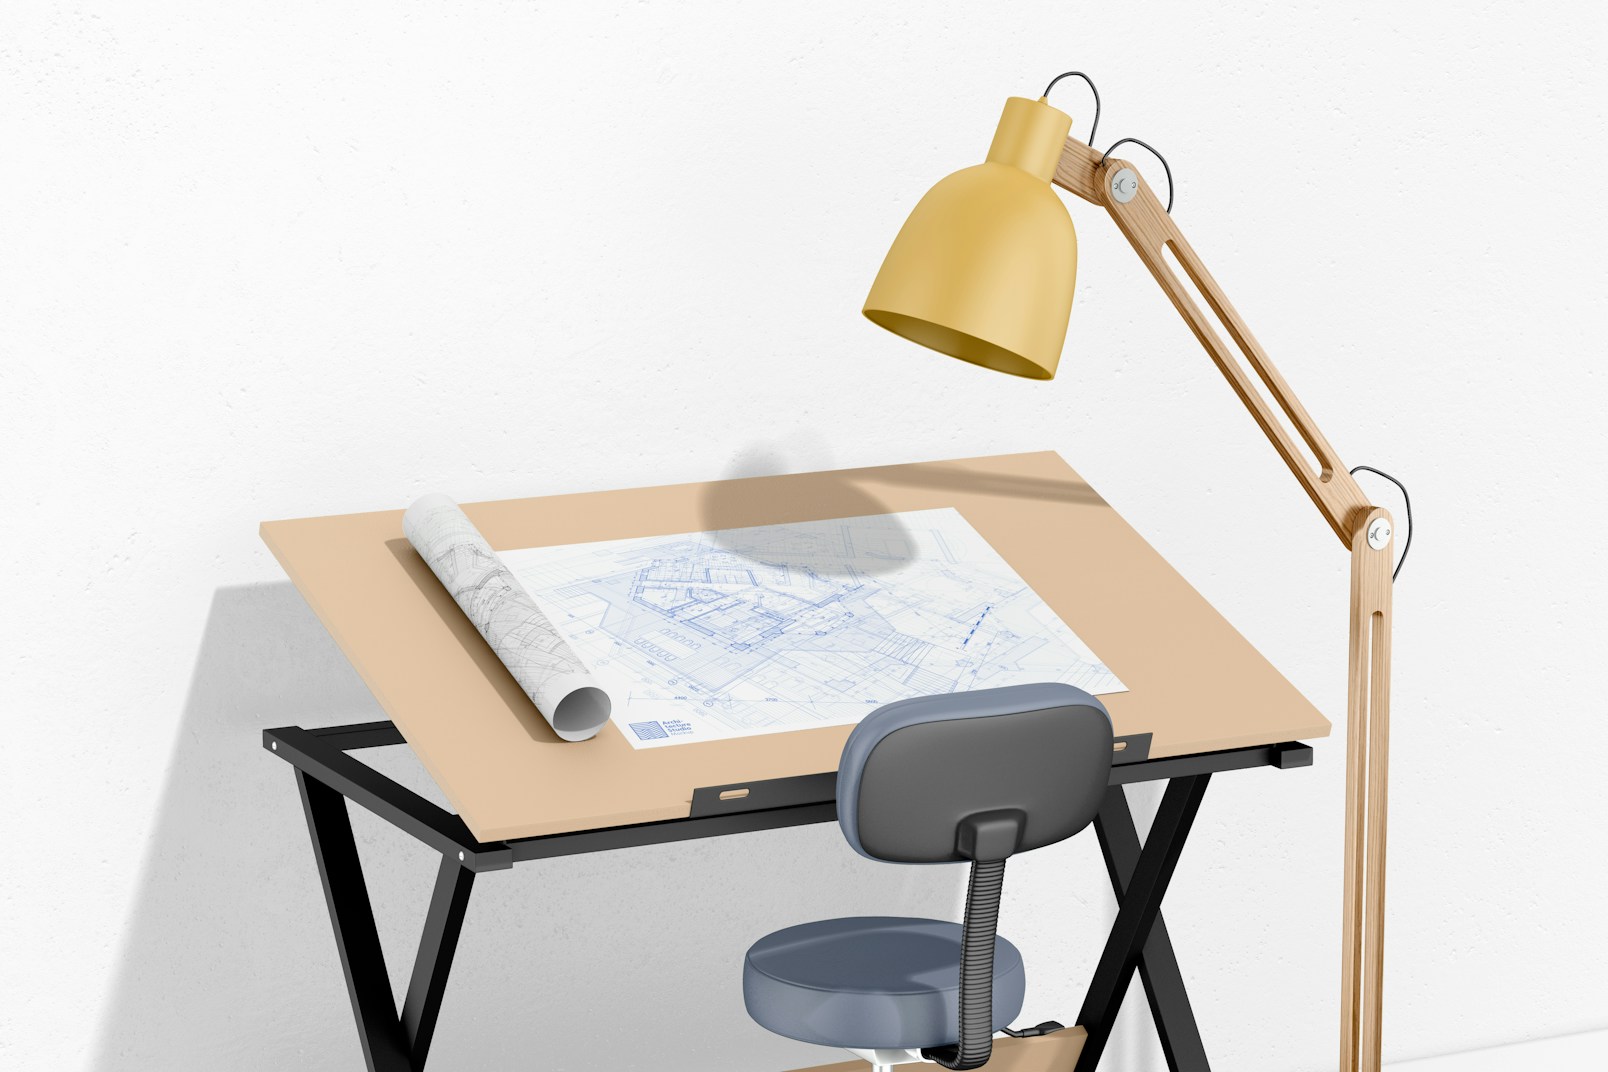 Architecture Studio Mockup, with Lamp